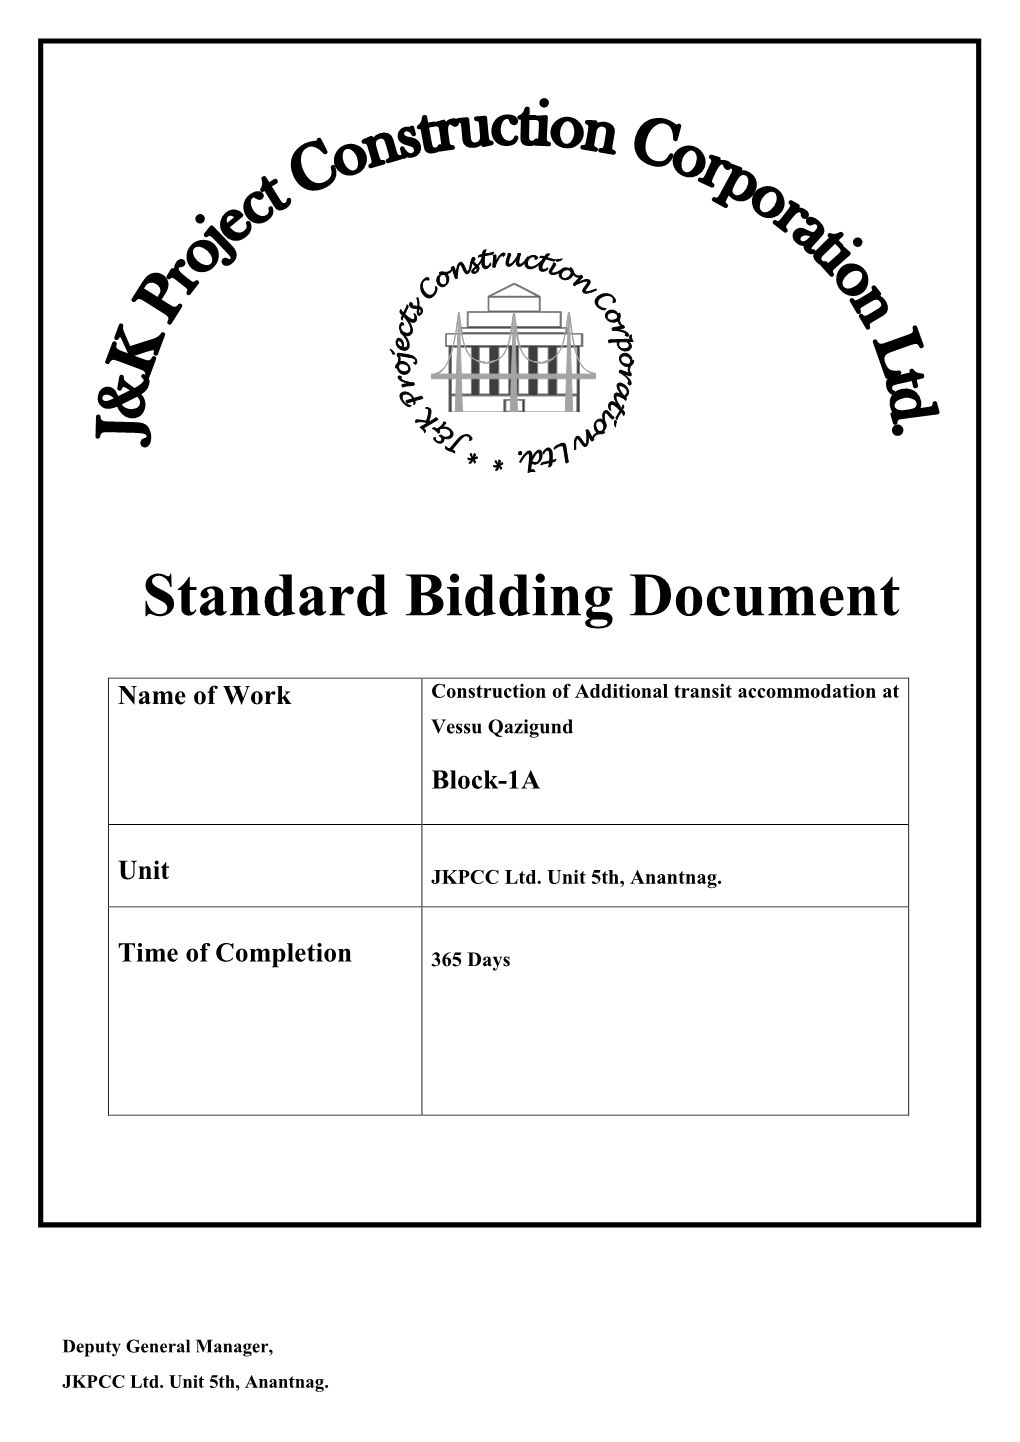 Standard Bidding Document